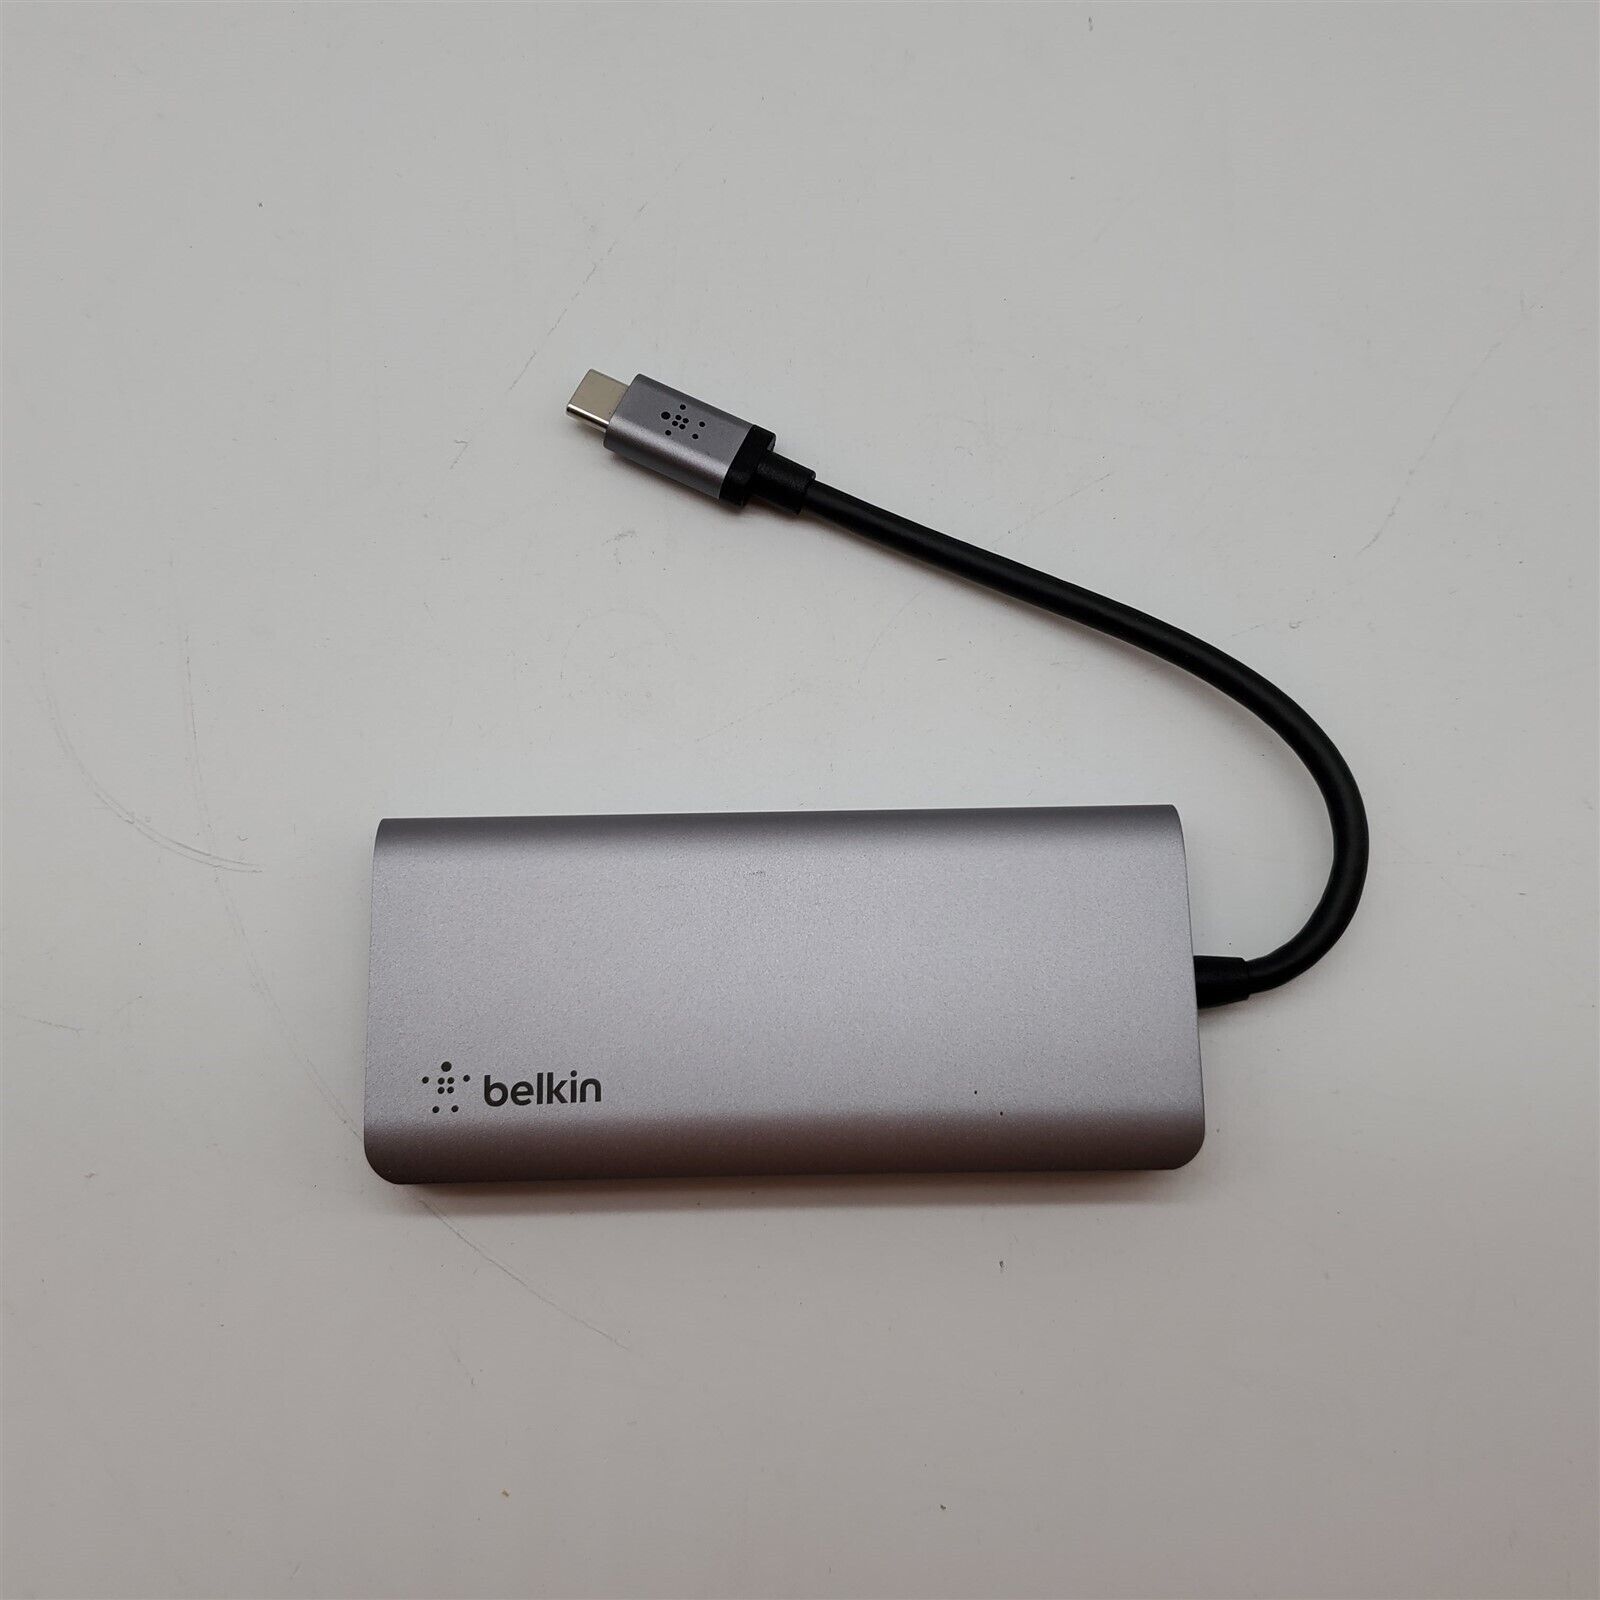 Belkin USB C Hub, 5-in-1 MultiPort Adapter Dock